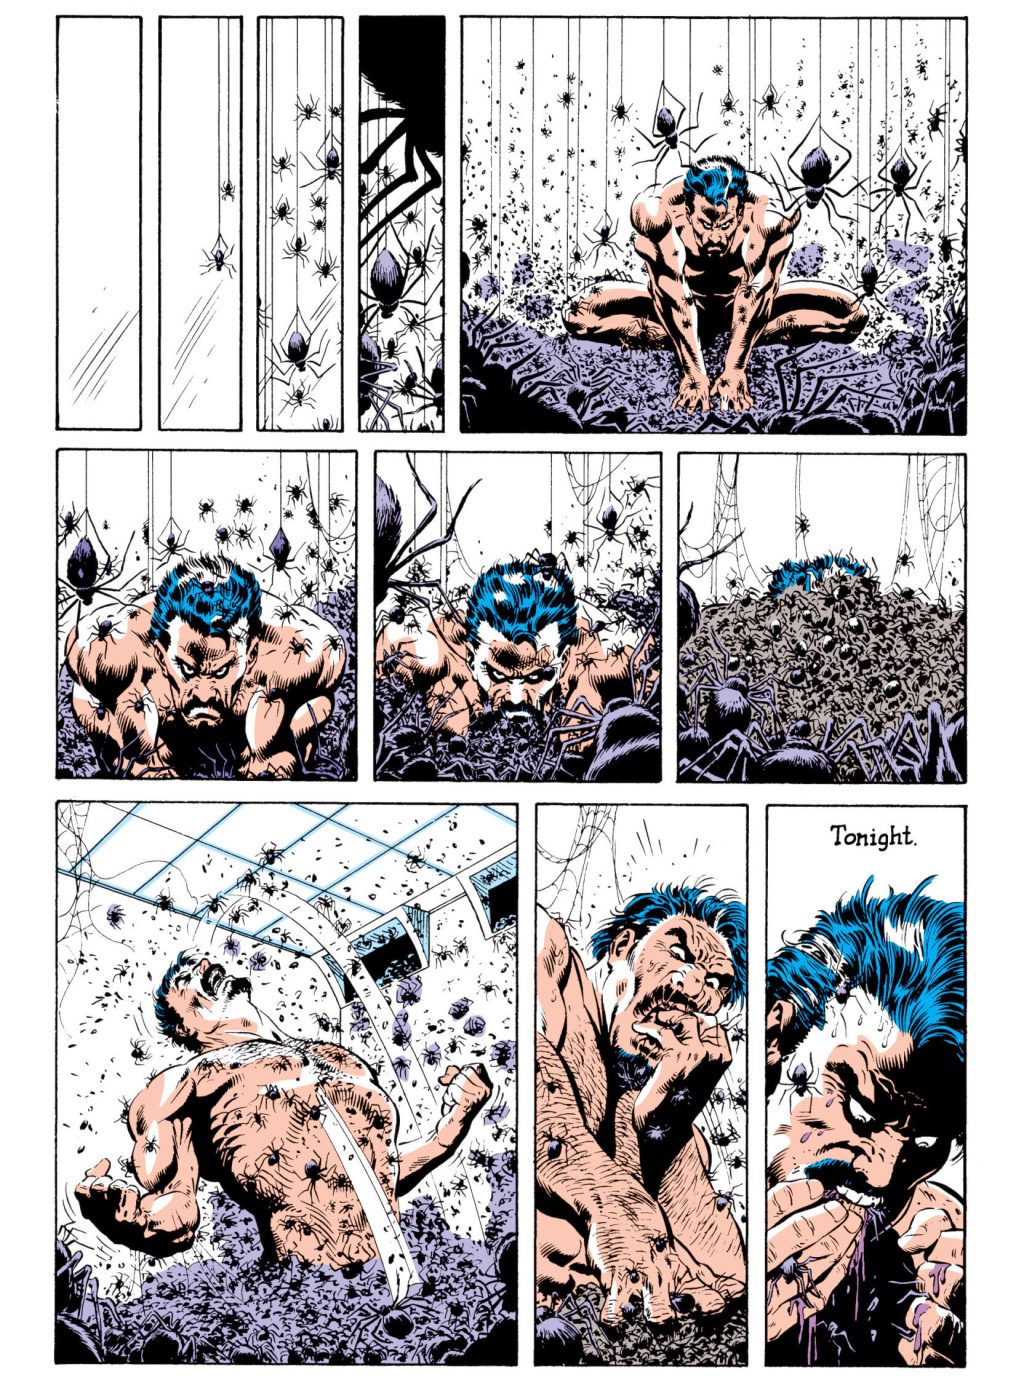 Kraven the Hunter prepares for his last hunt in Web of Spider-Man Vol. 1 #31 "The Coffin" (1987), Marvel Comics. Words by J.M. DeMatteis, art by Mice Zeck, Bob McLeod, Janet Jackson, Bob Sharen, Mike Zeck, and Rick Parker